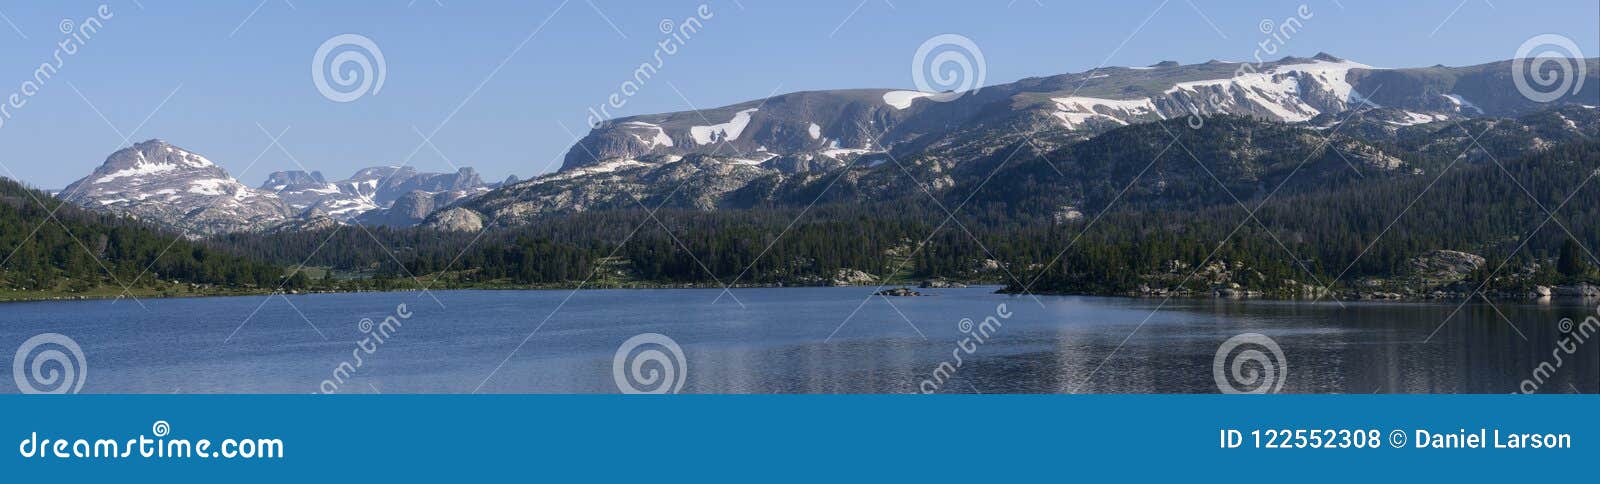 island lake in the beartooth mountains